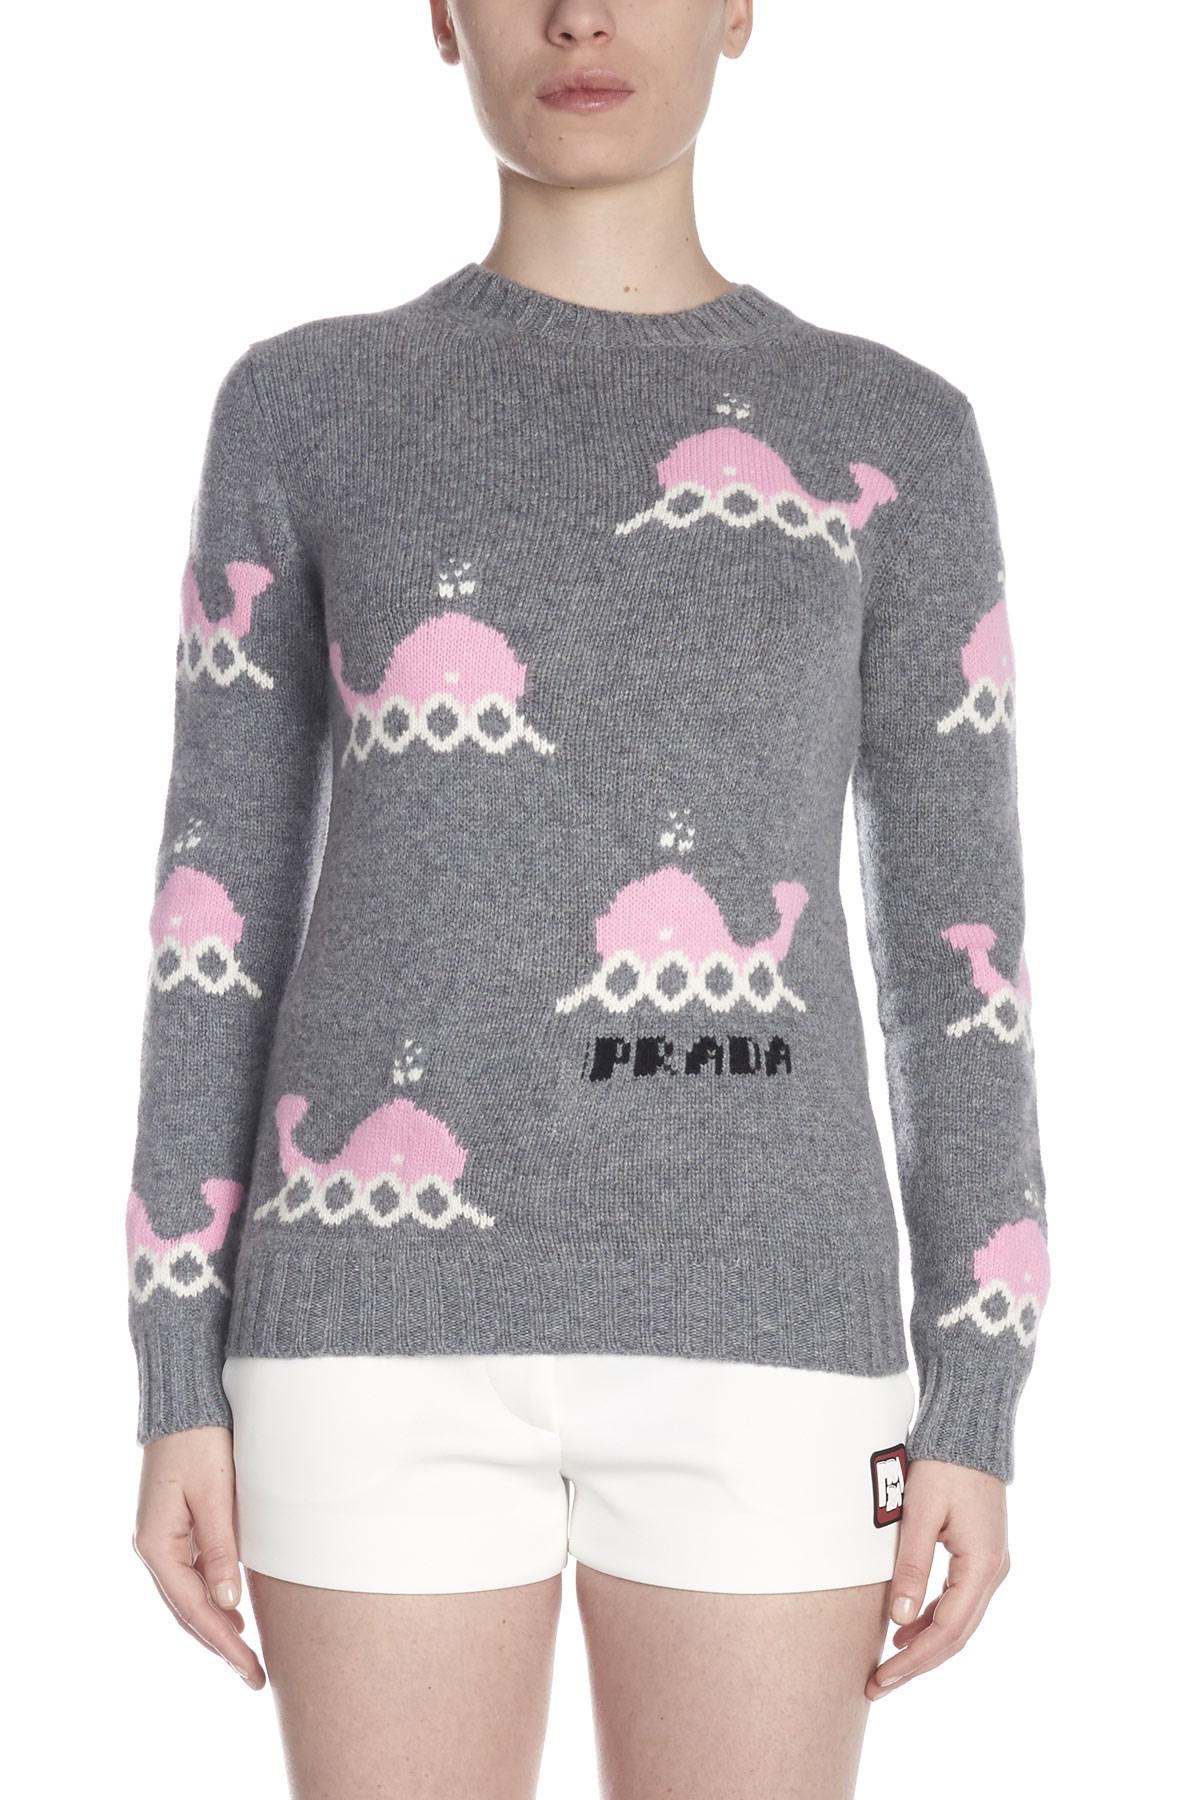 prada whale sweater